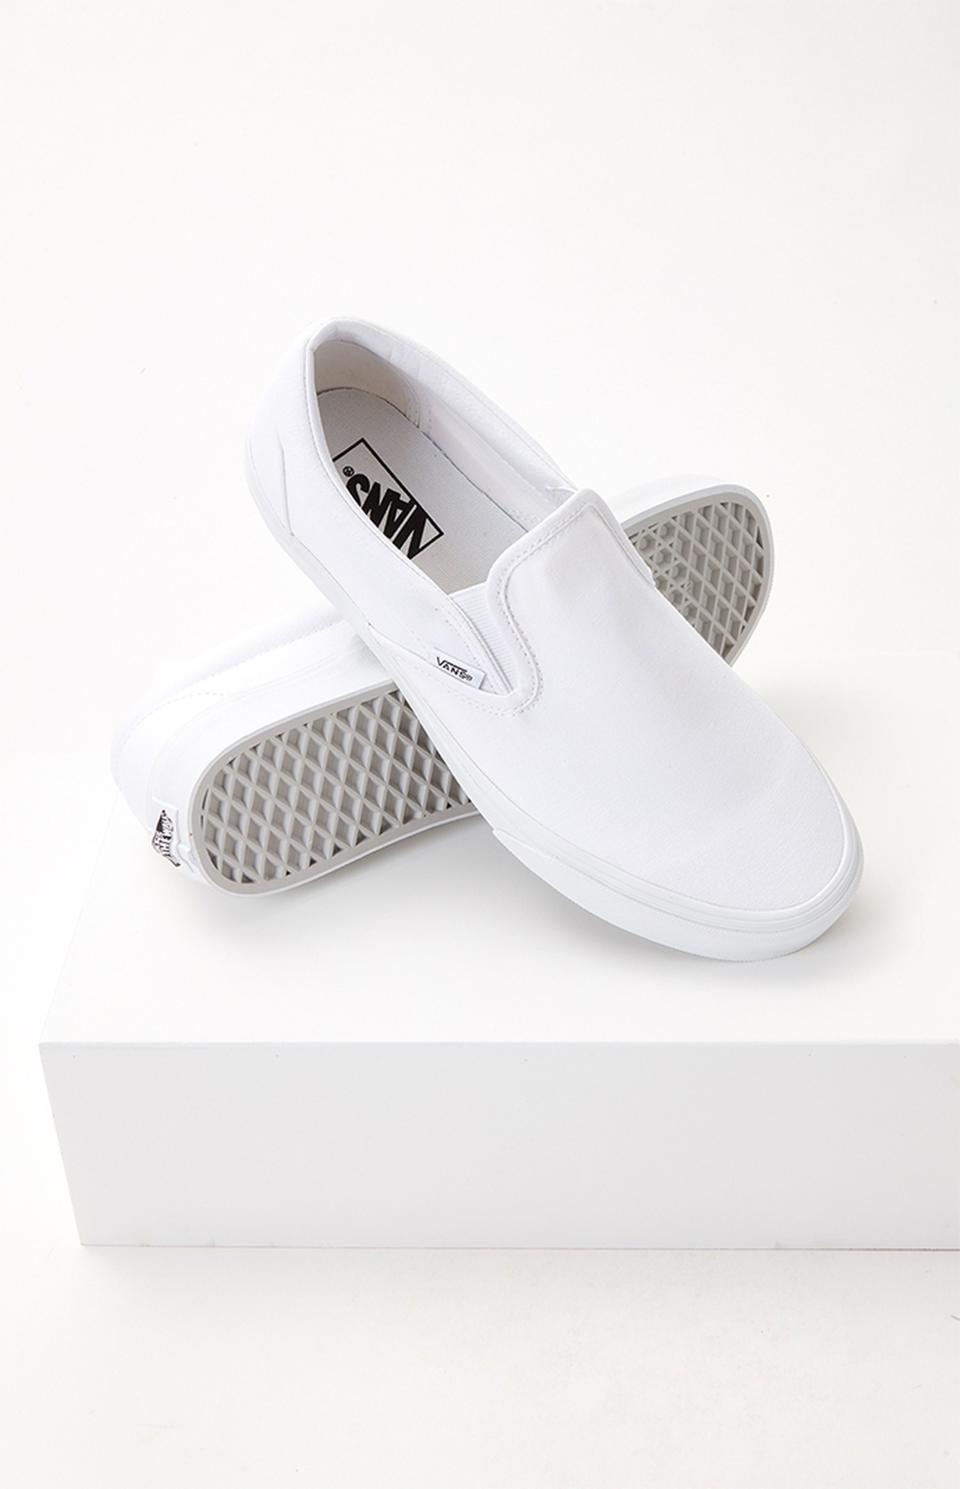 51) Vans Classic Slip-On White Shoes